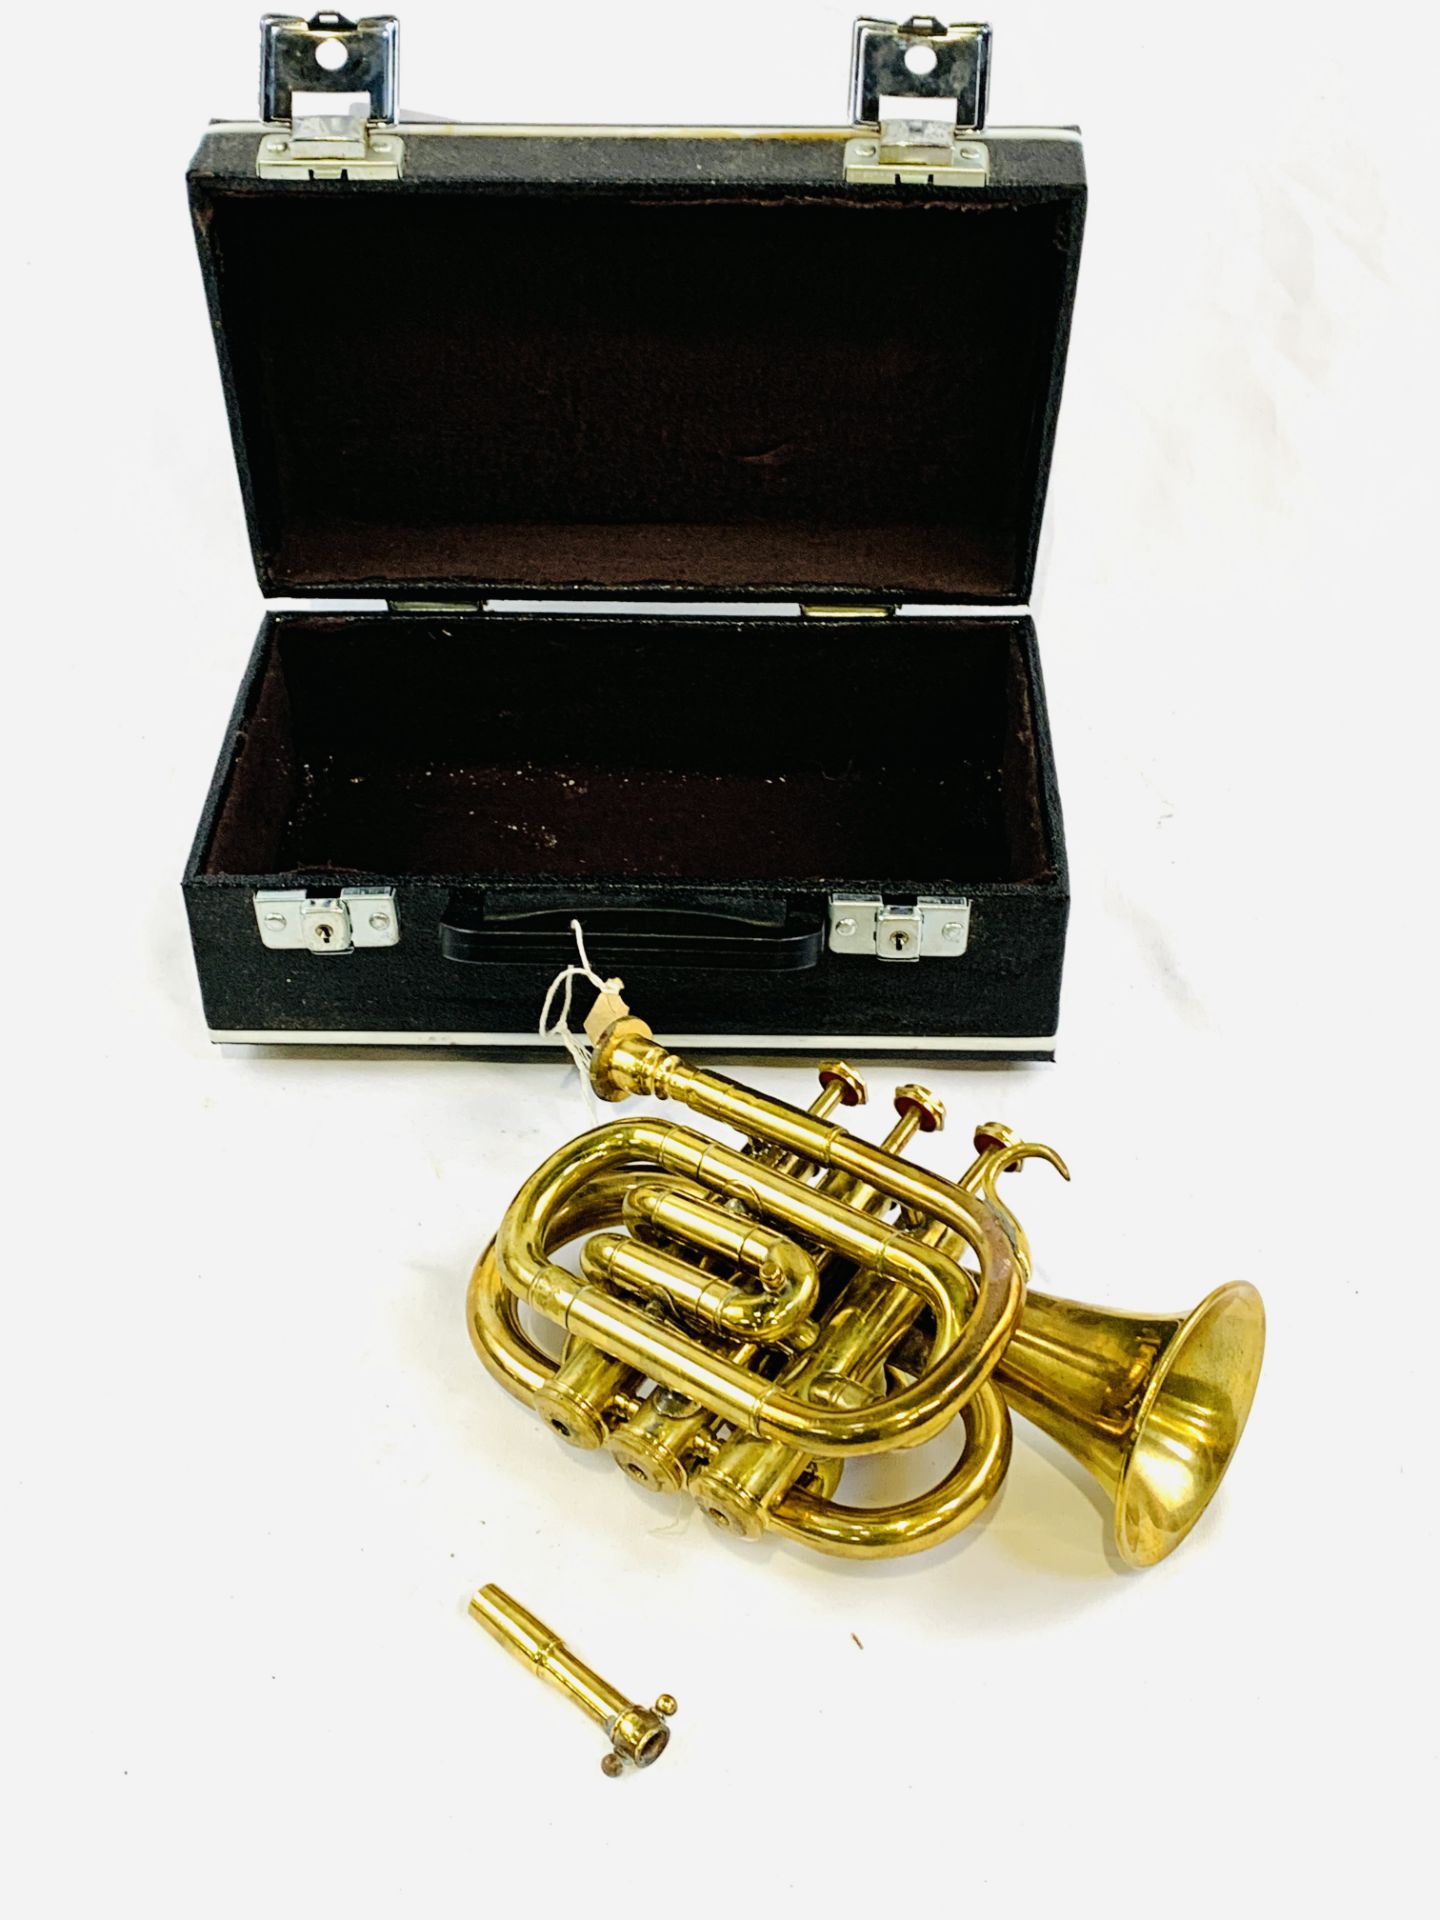 Brass pocket cornet in original case